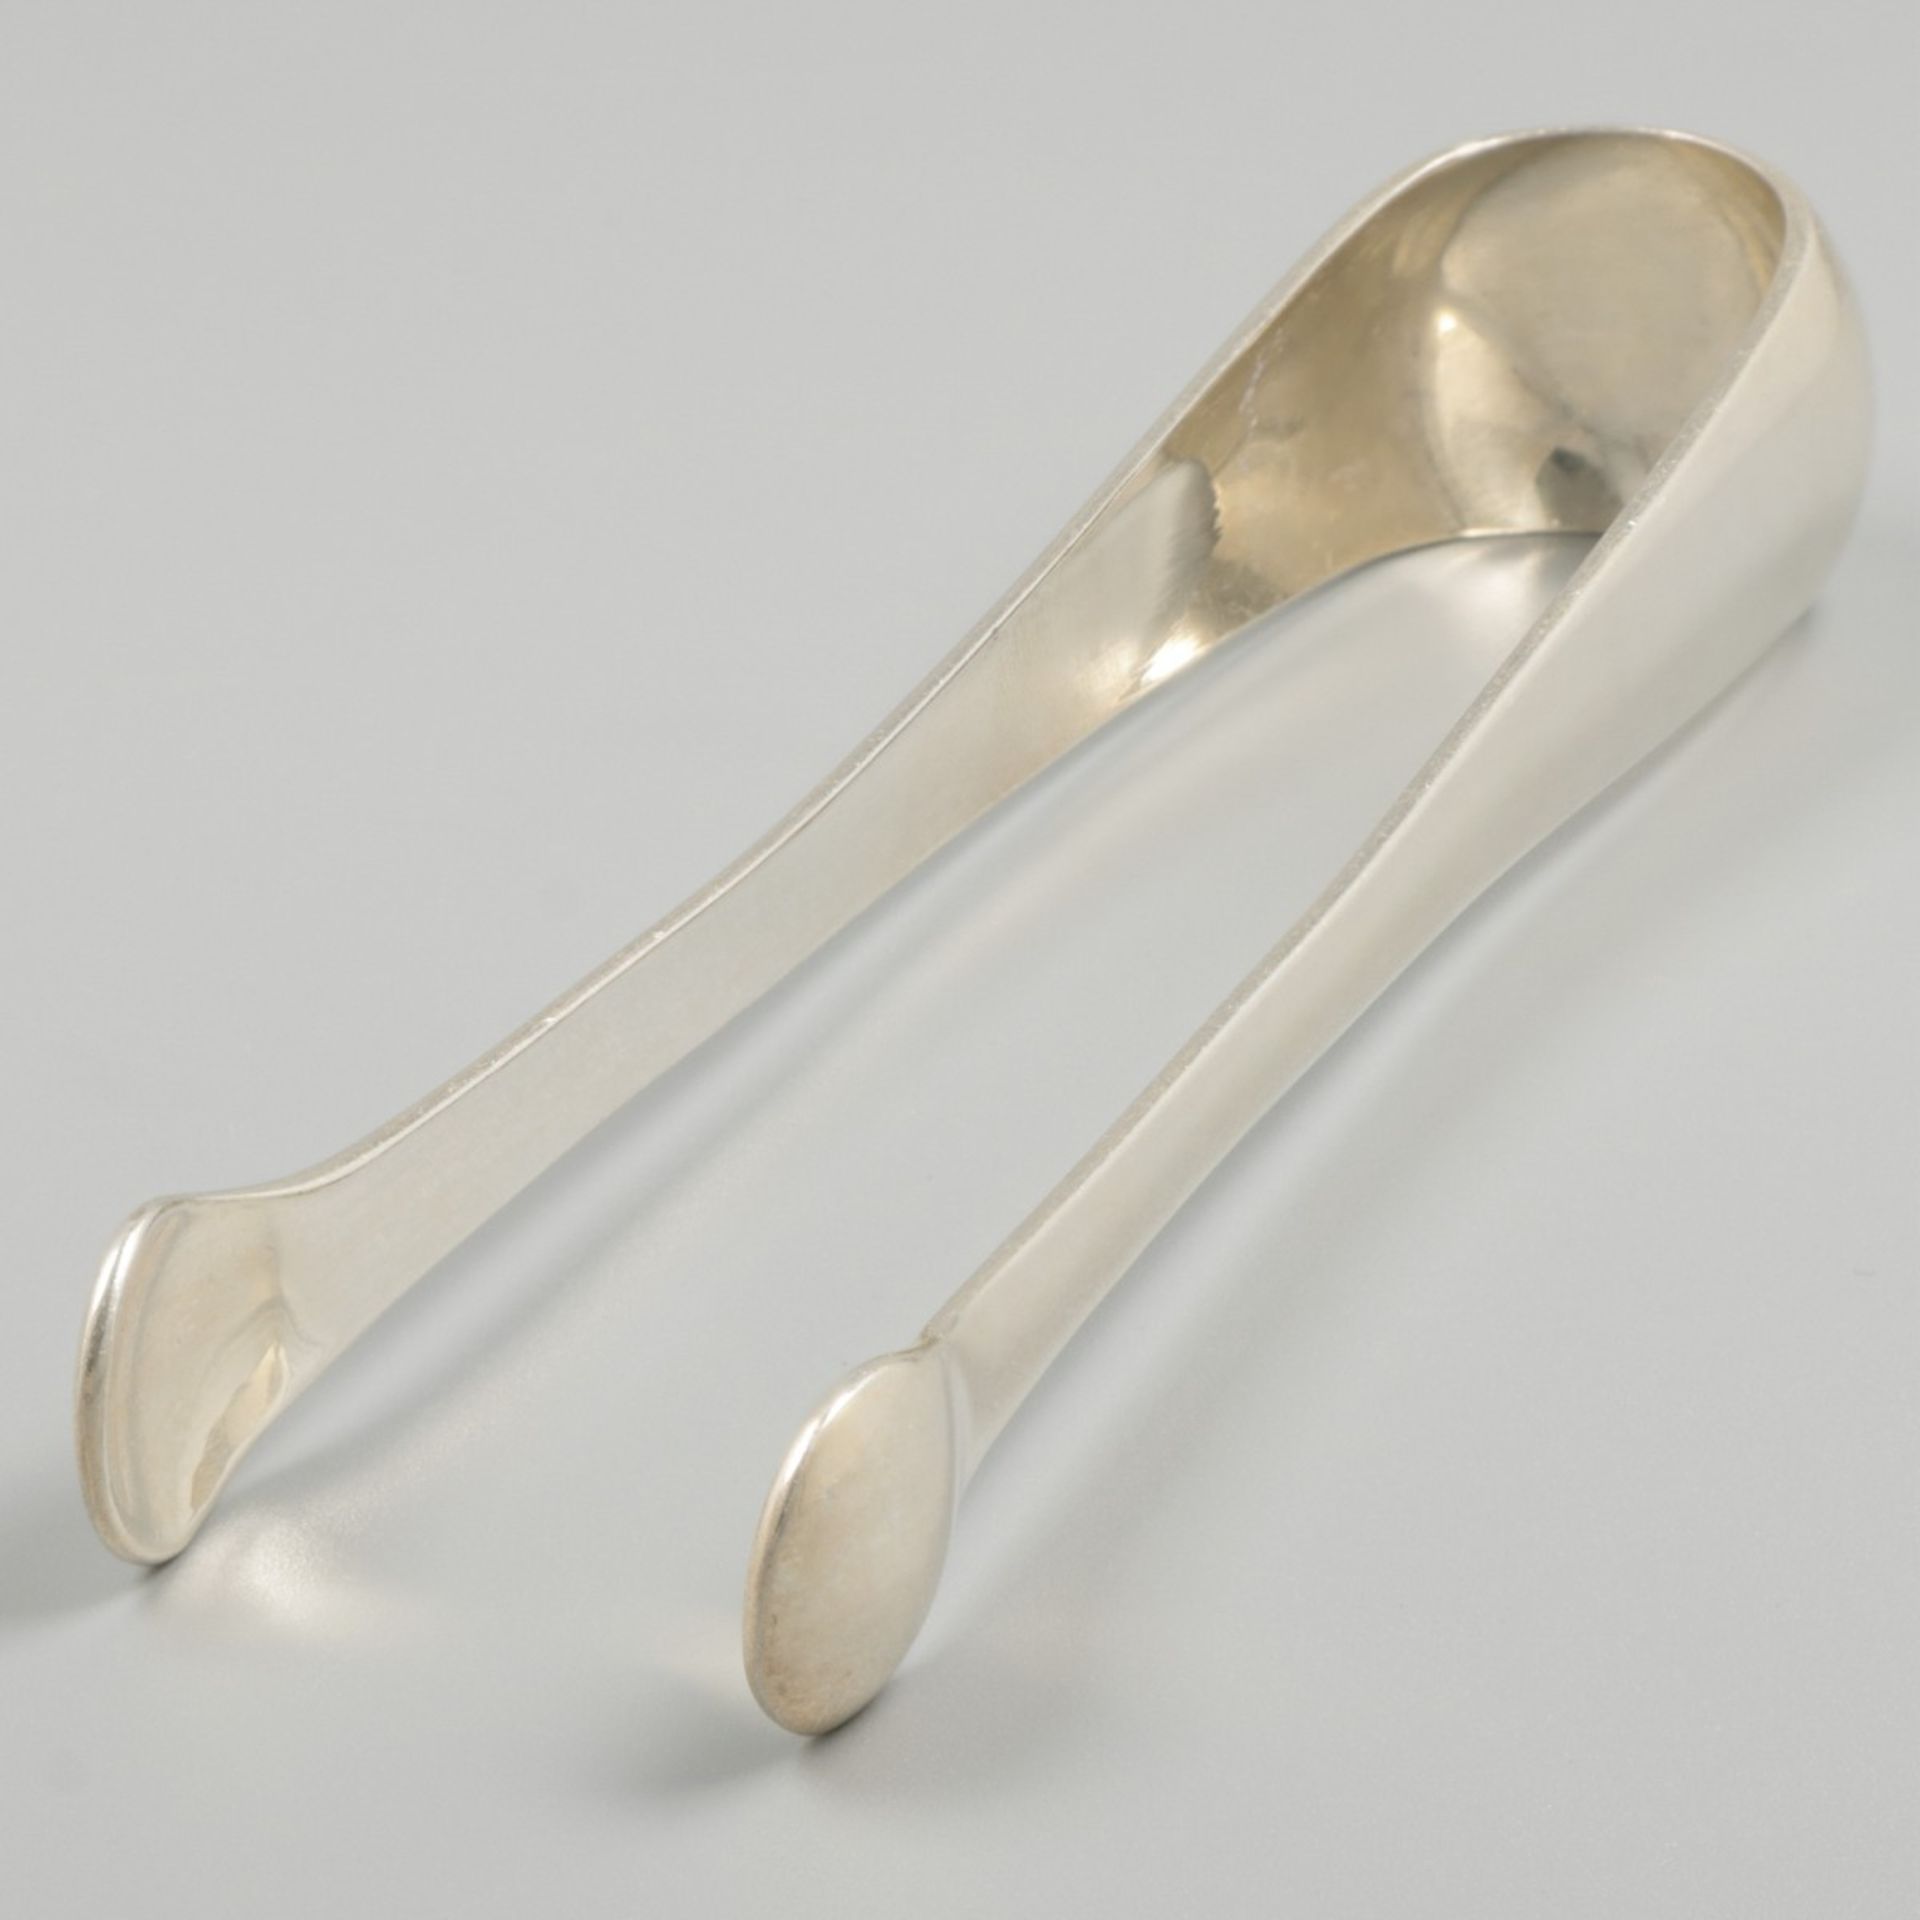 Sugar tongs (Gallia L'Alfenide) silver plated. - Image 2 of 5